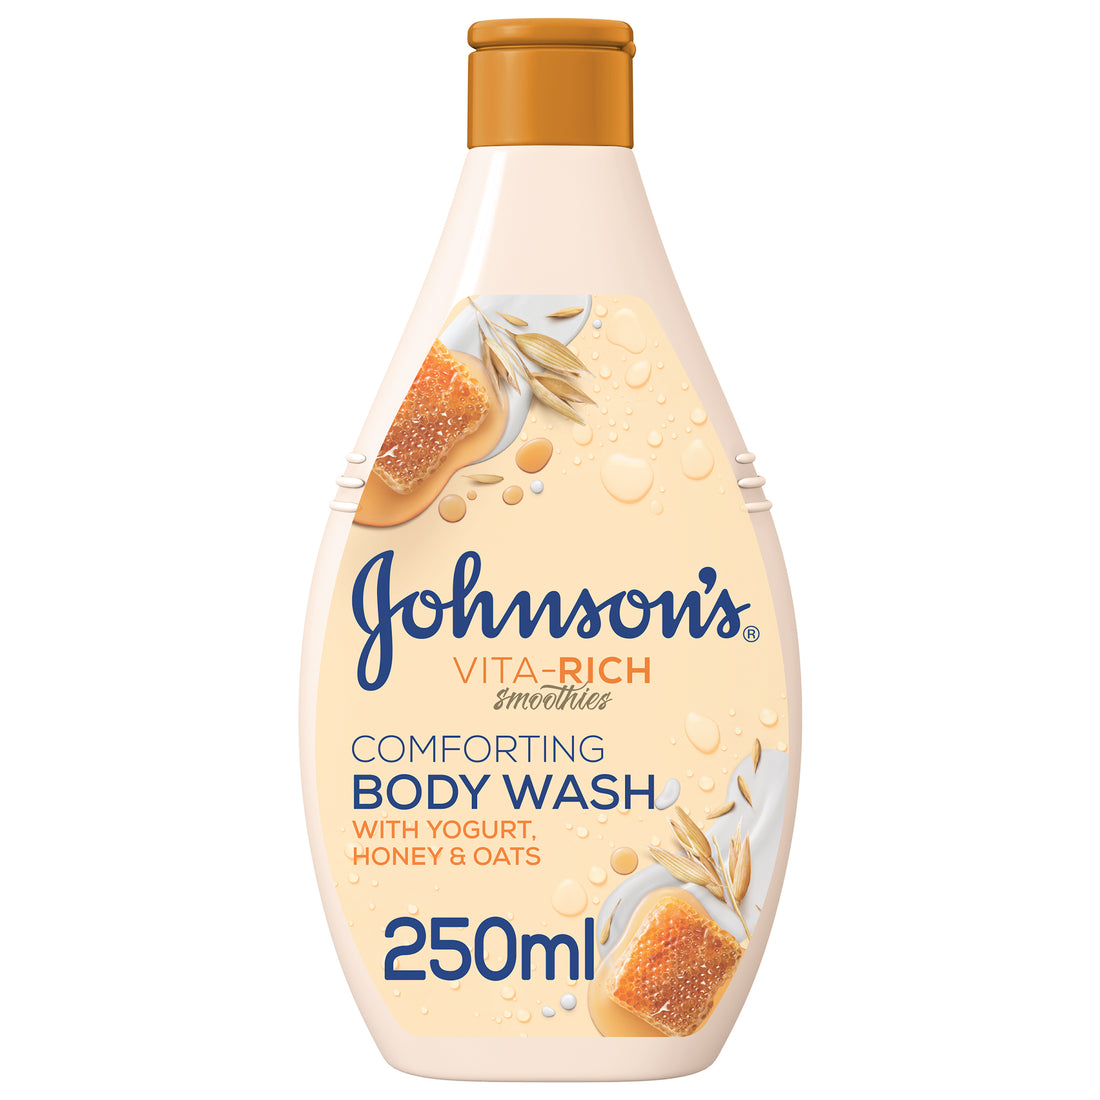 JOHNSON’S Body Wash - Vita-Rich, Smoothies, Comforting, Yogurt, Honey &amp; Oats, 250ml